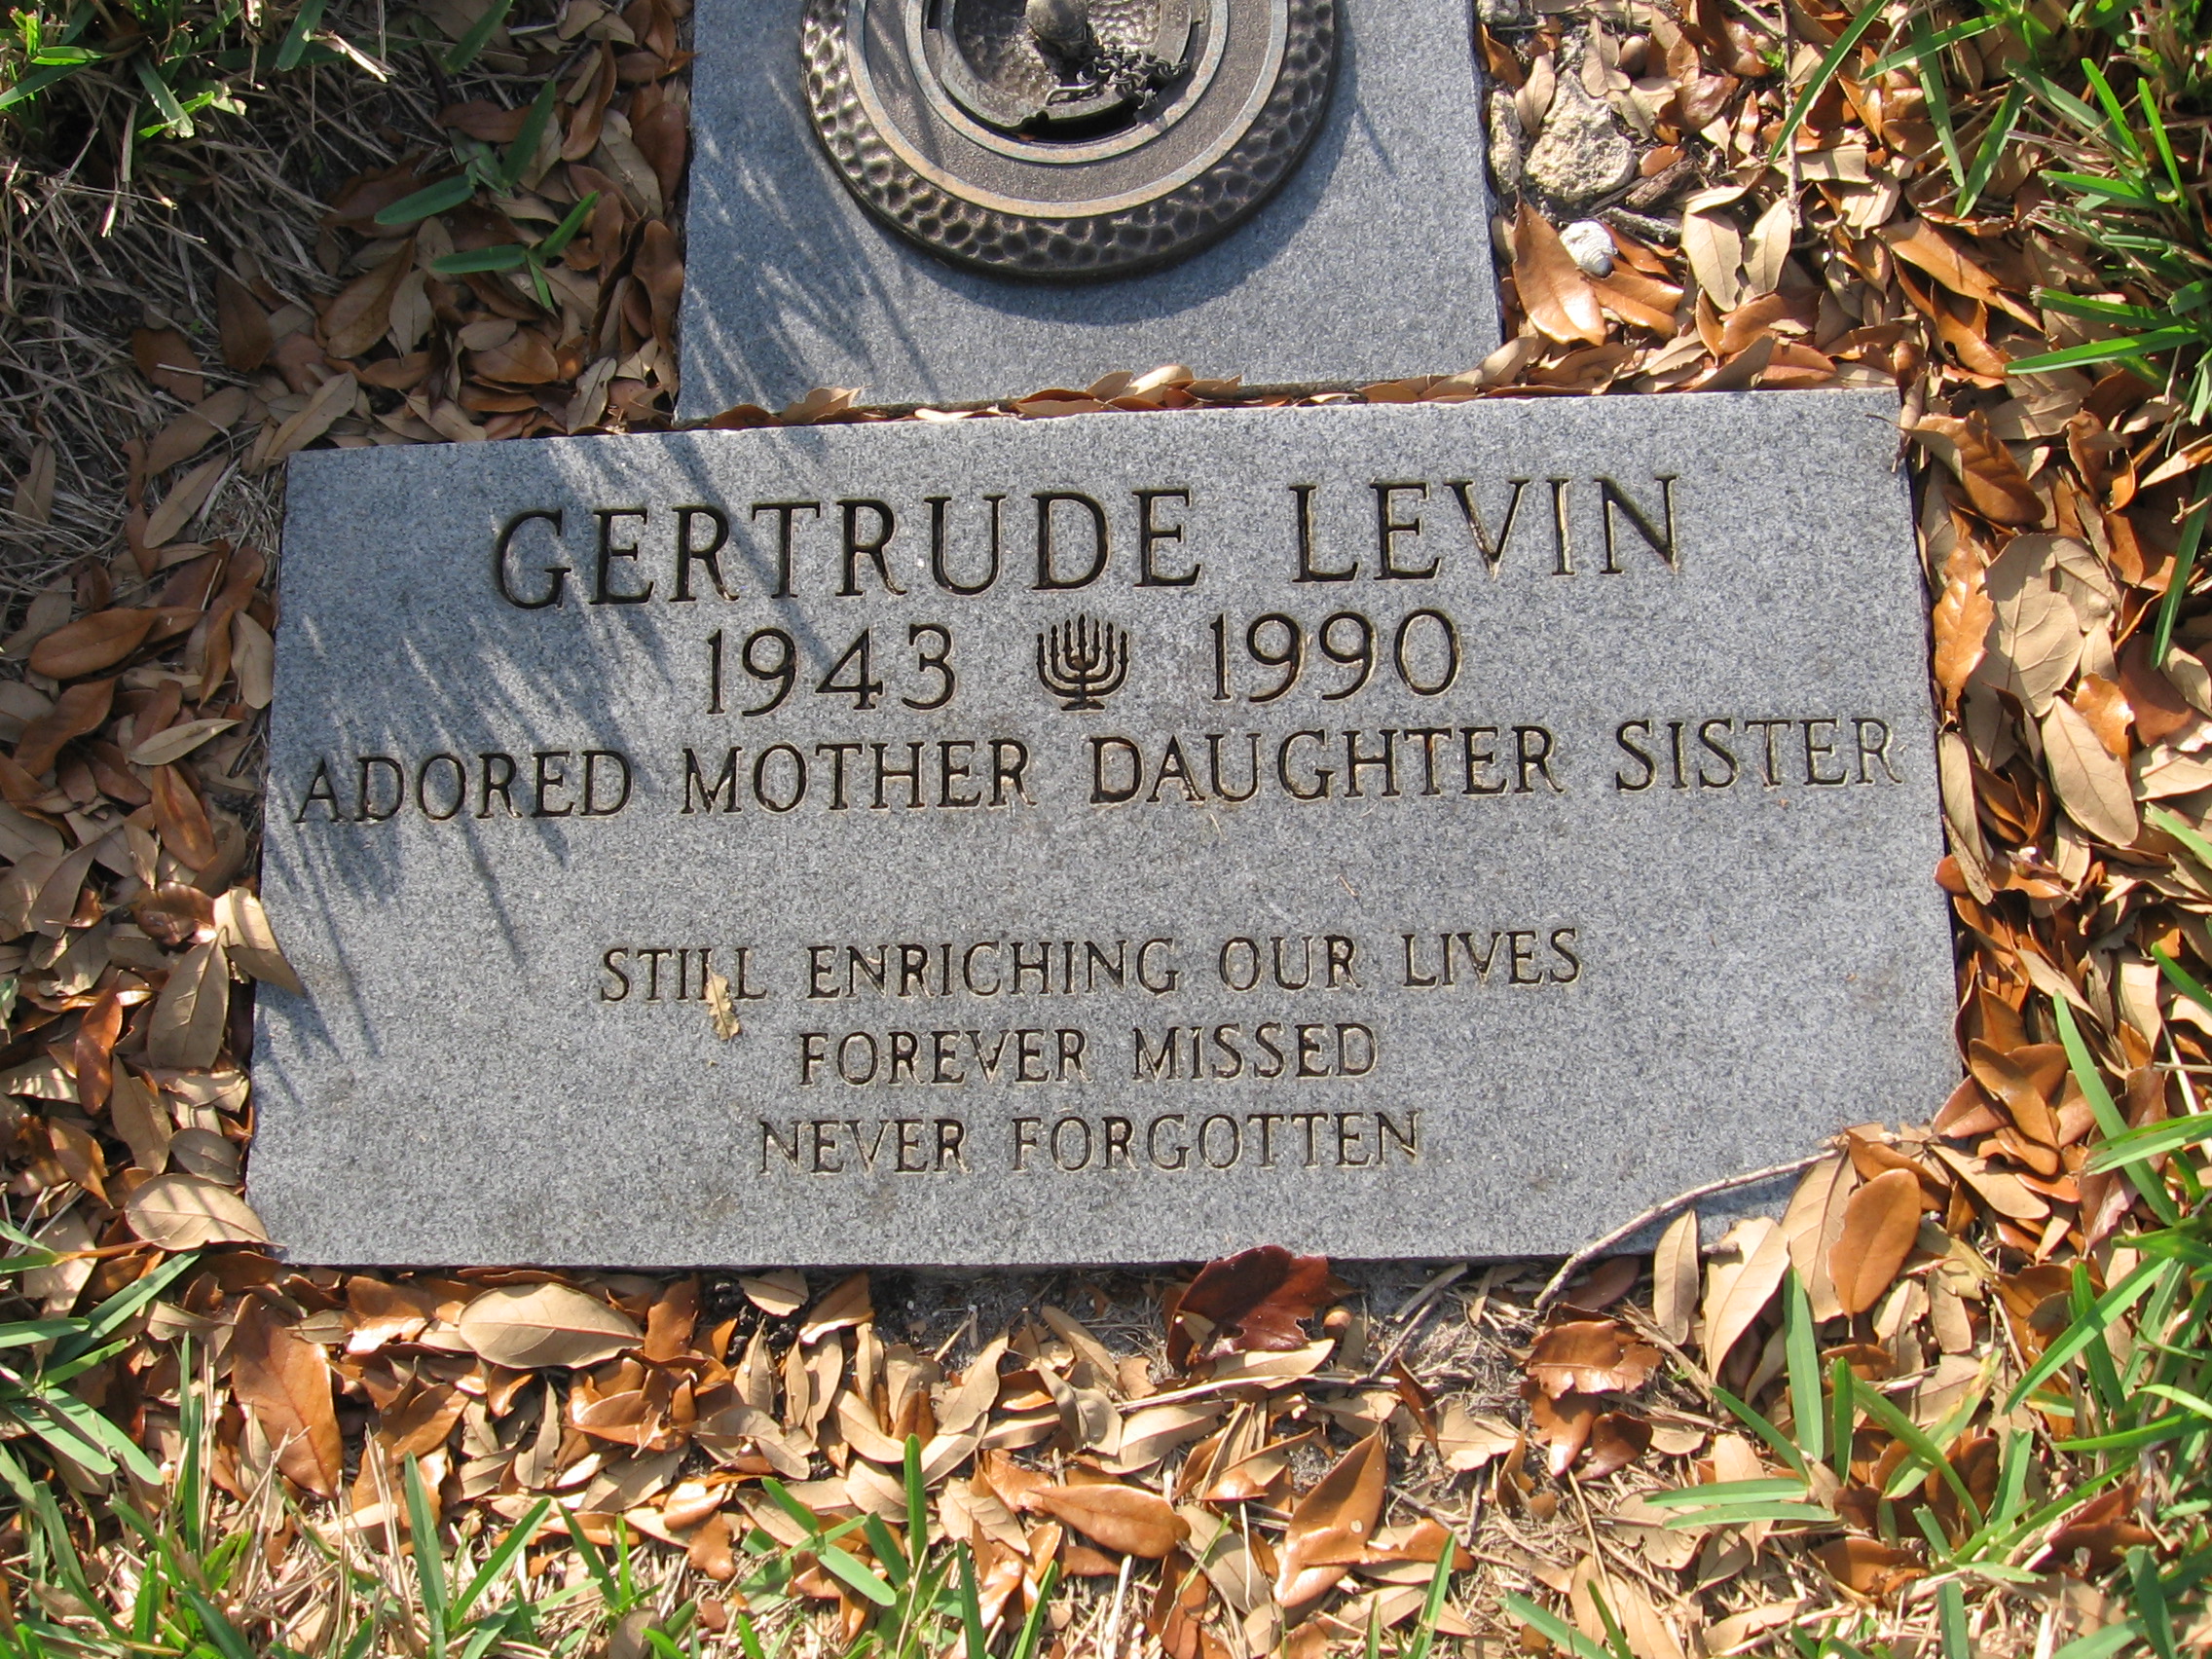 Gertrude Levin